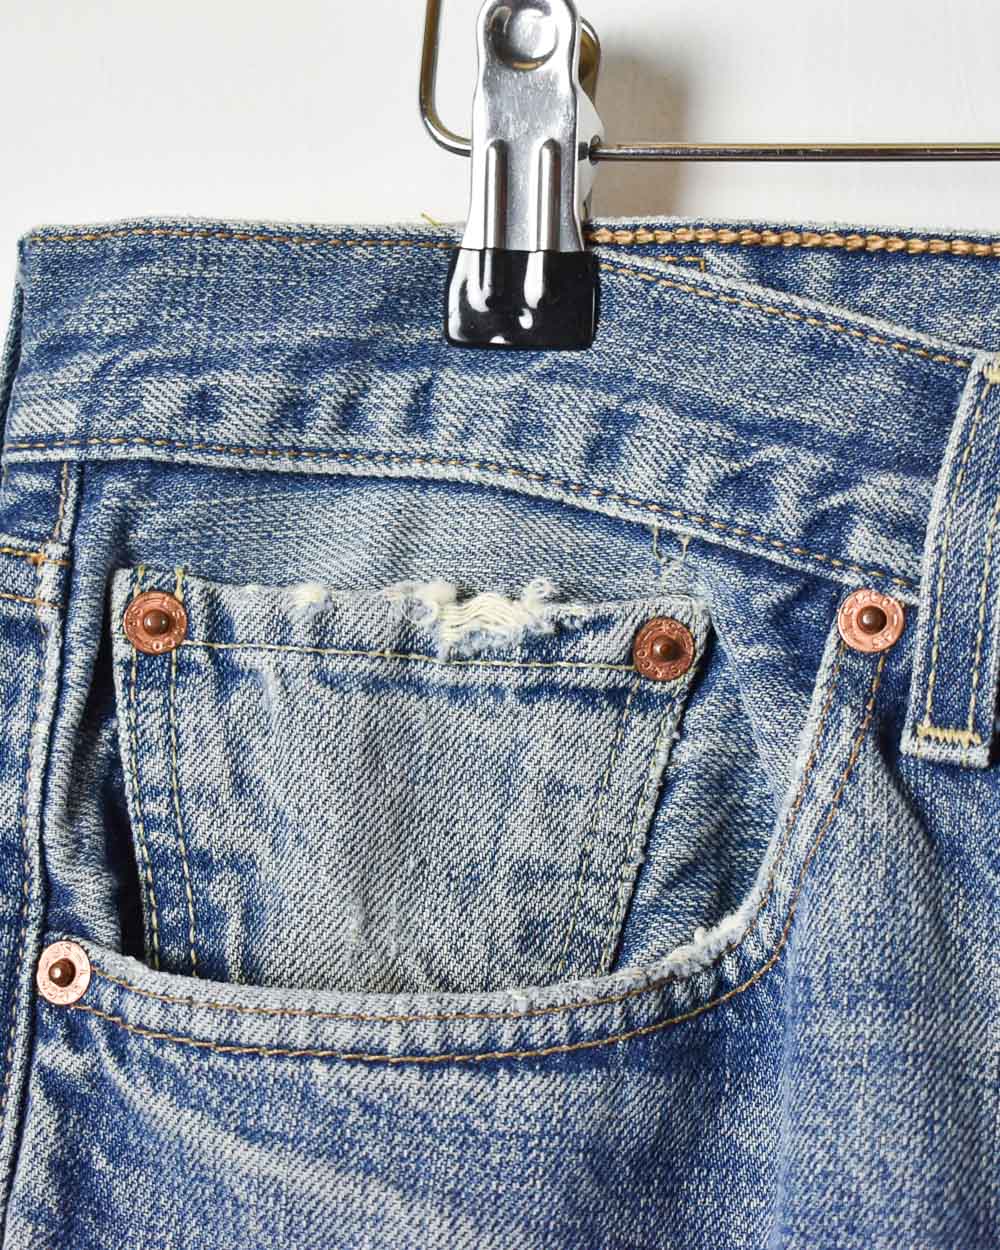 Blue Levi's Distressed 501 Jeans Shorts - W38 L22